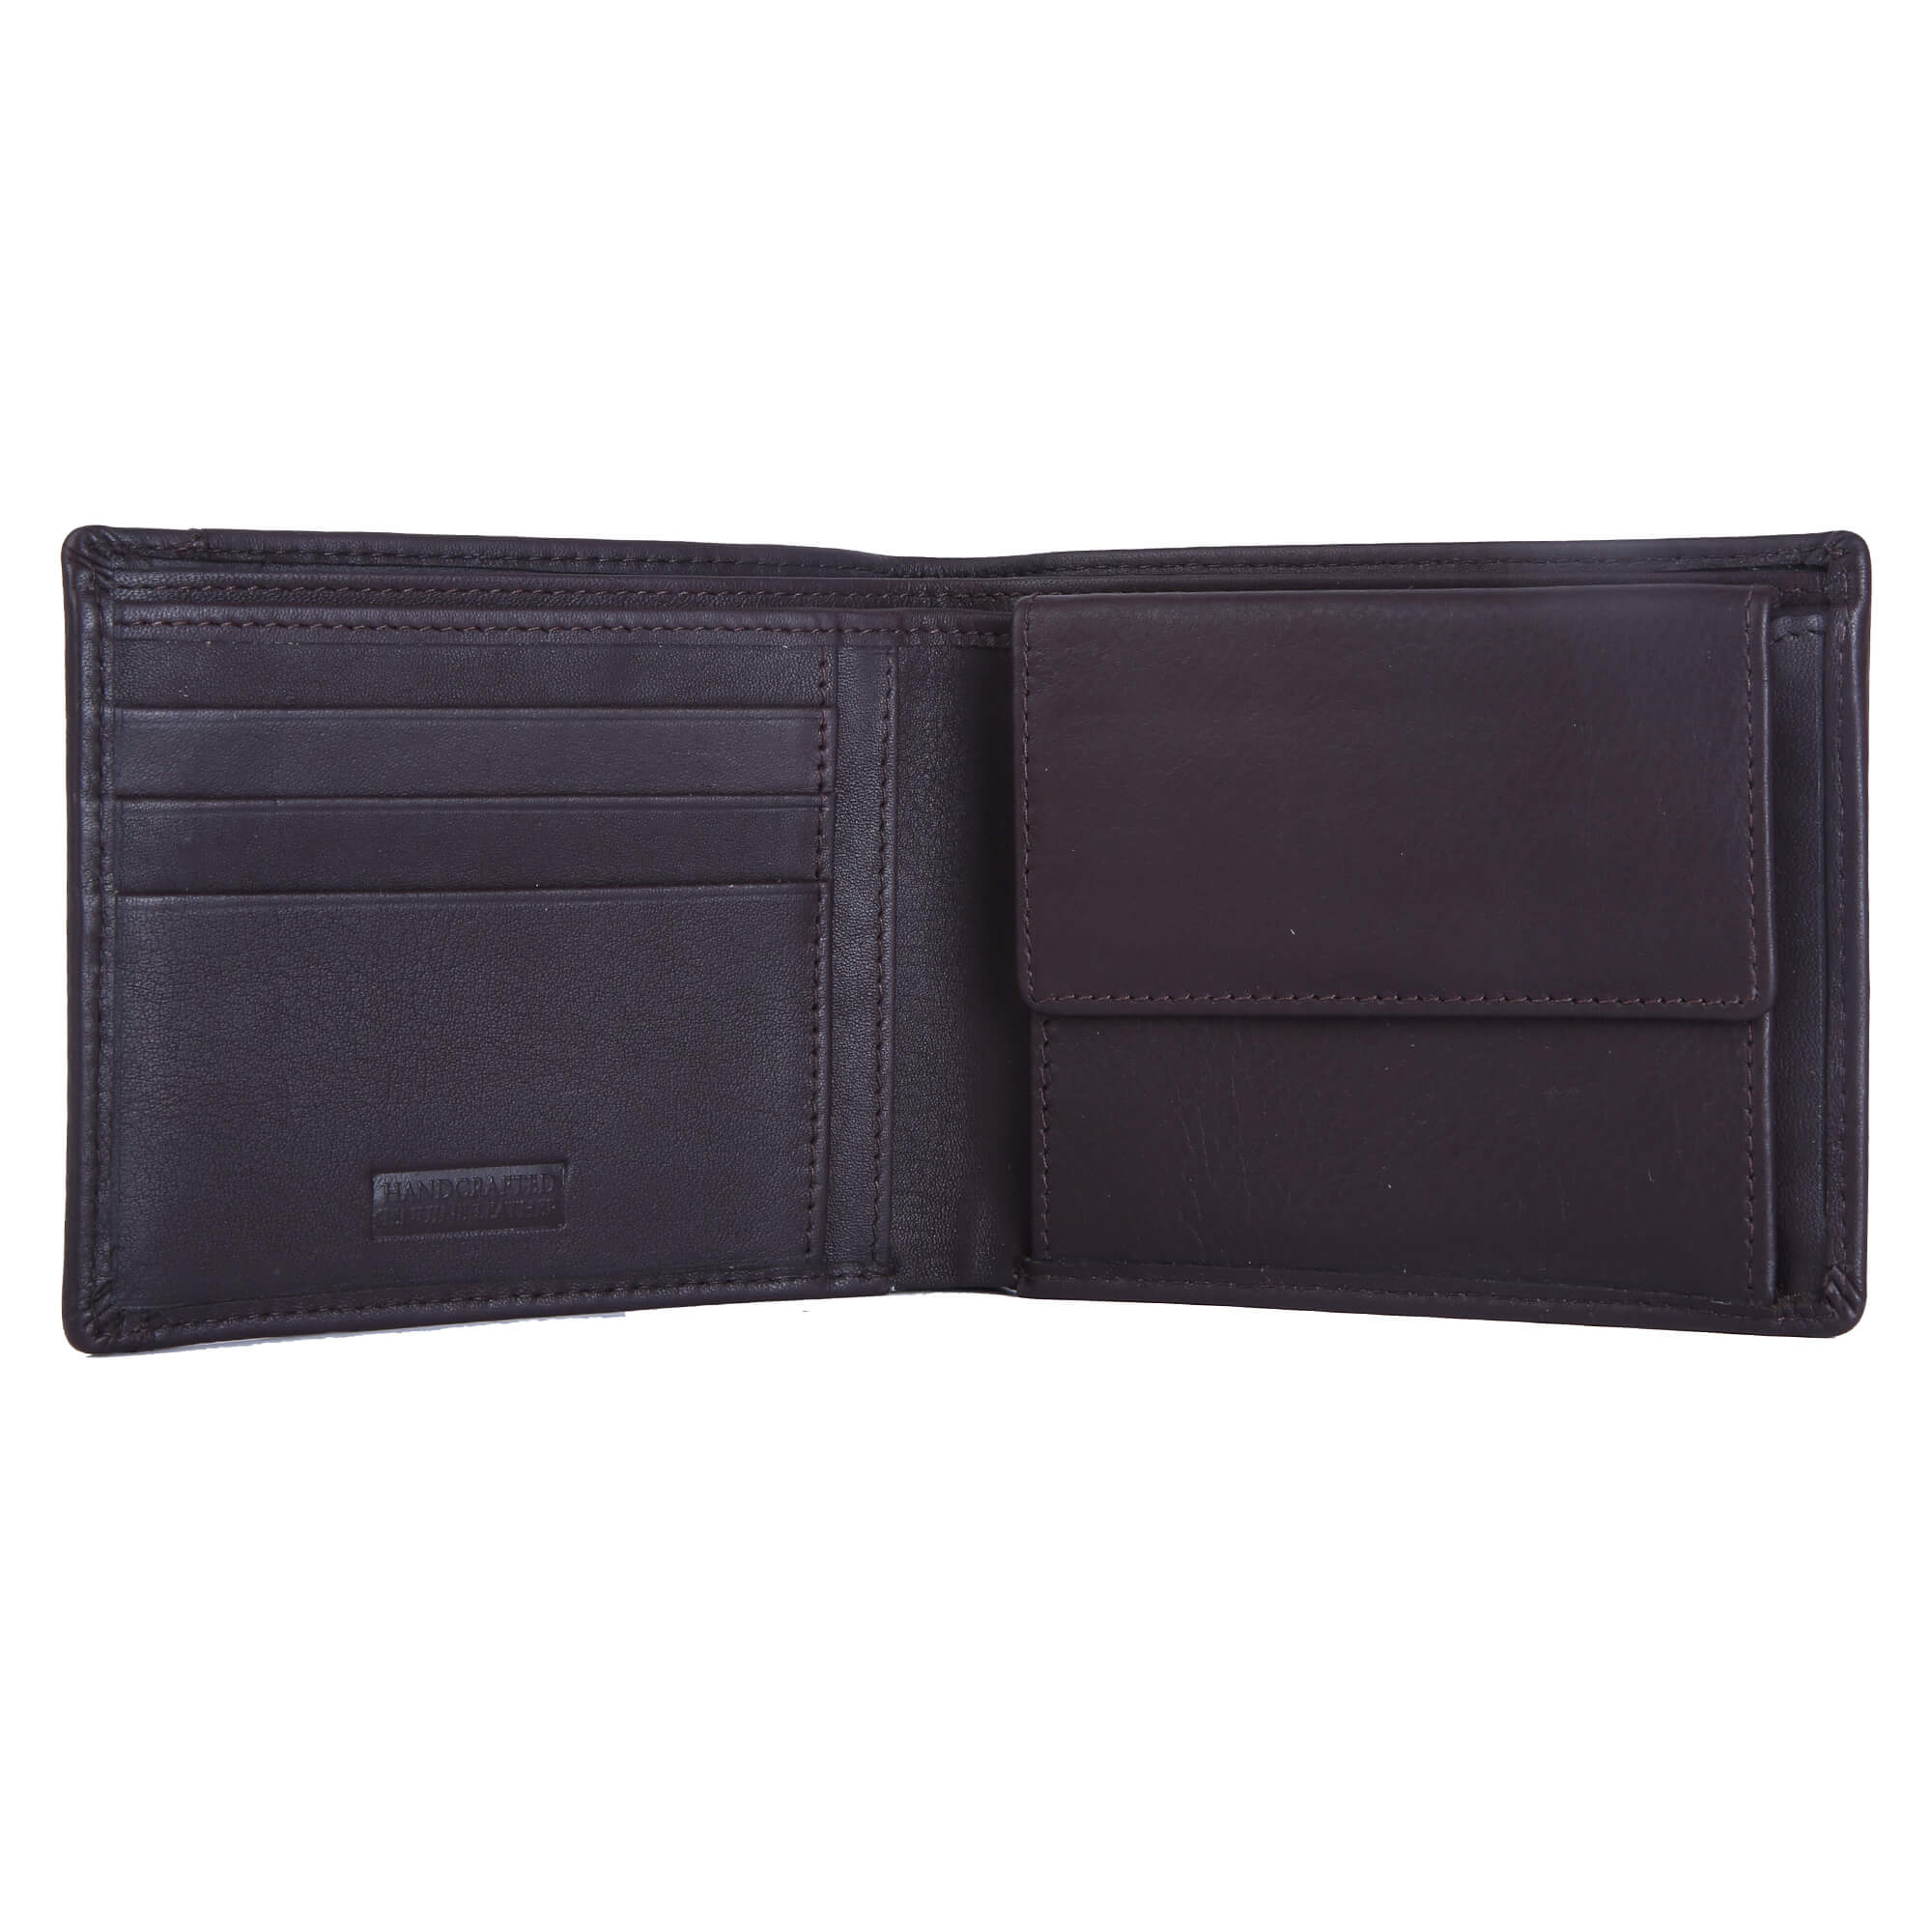 RFID Protected Men's Wallet - Verona - Brown/Cognac - Massi Miliano